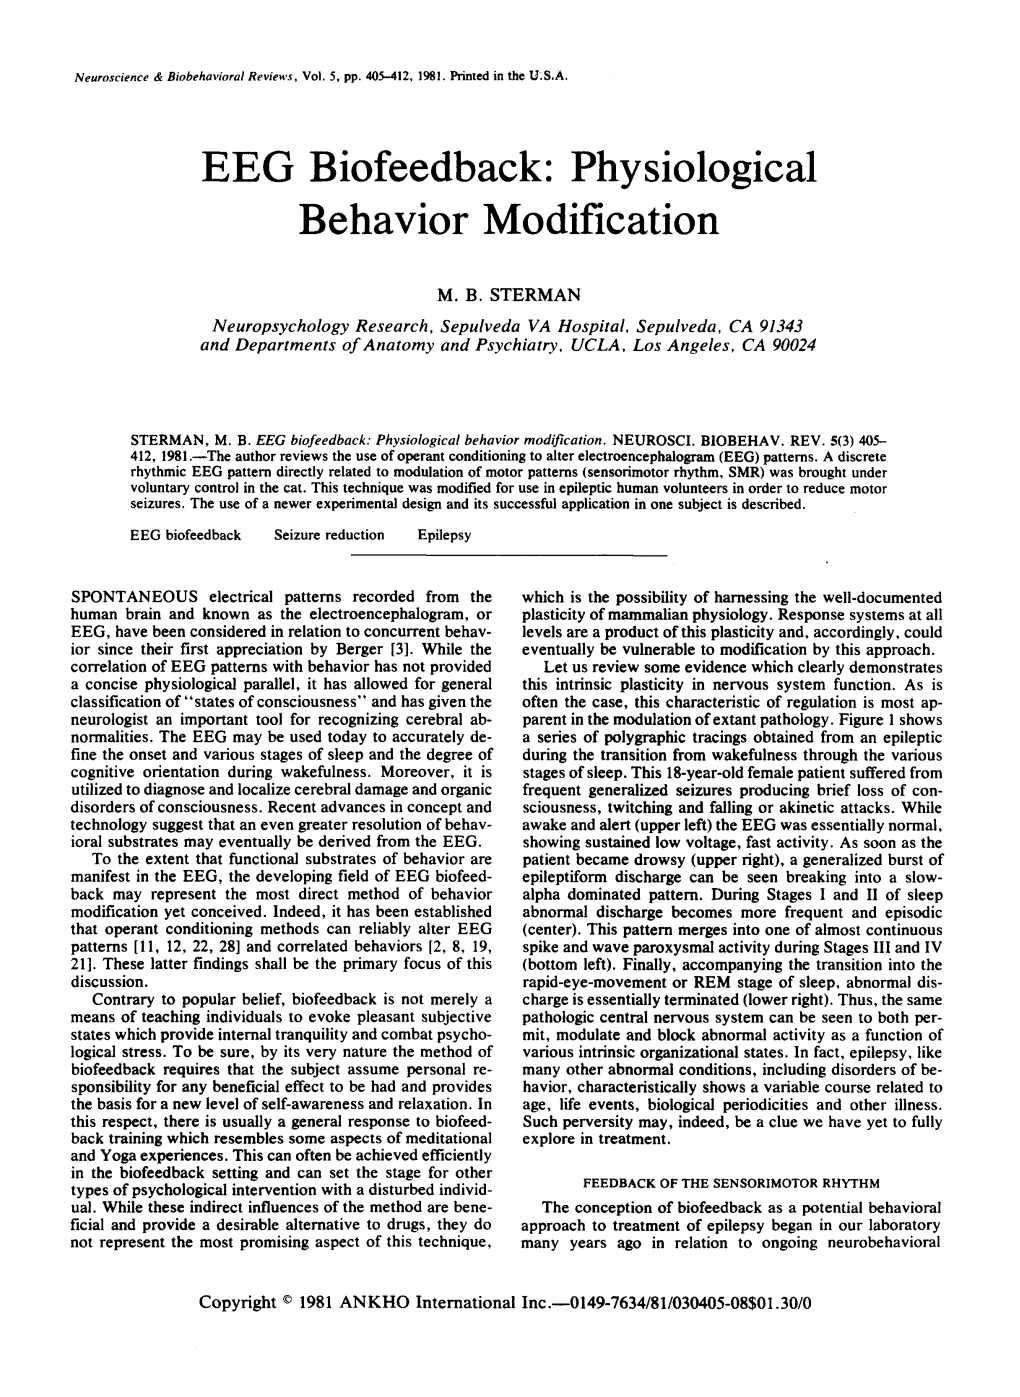 EEG Biofeedback: Physiological Behavior Modification